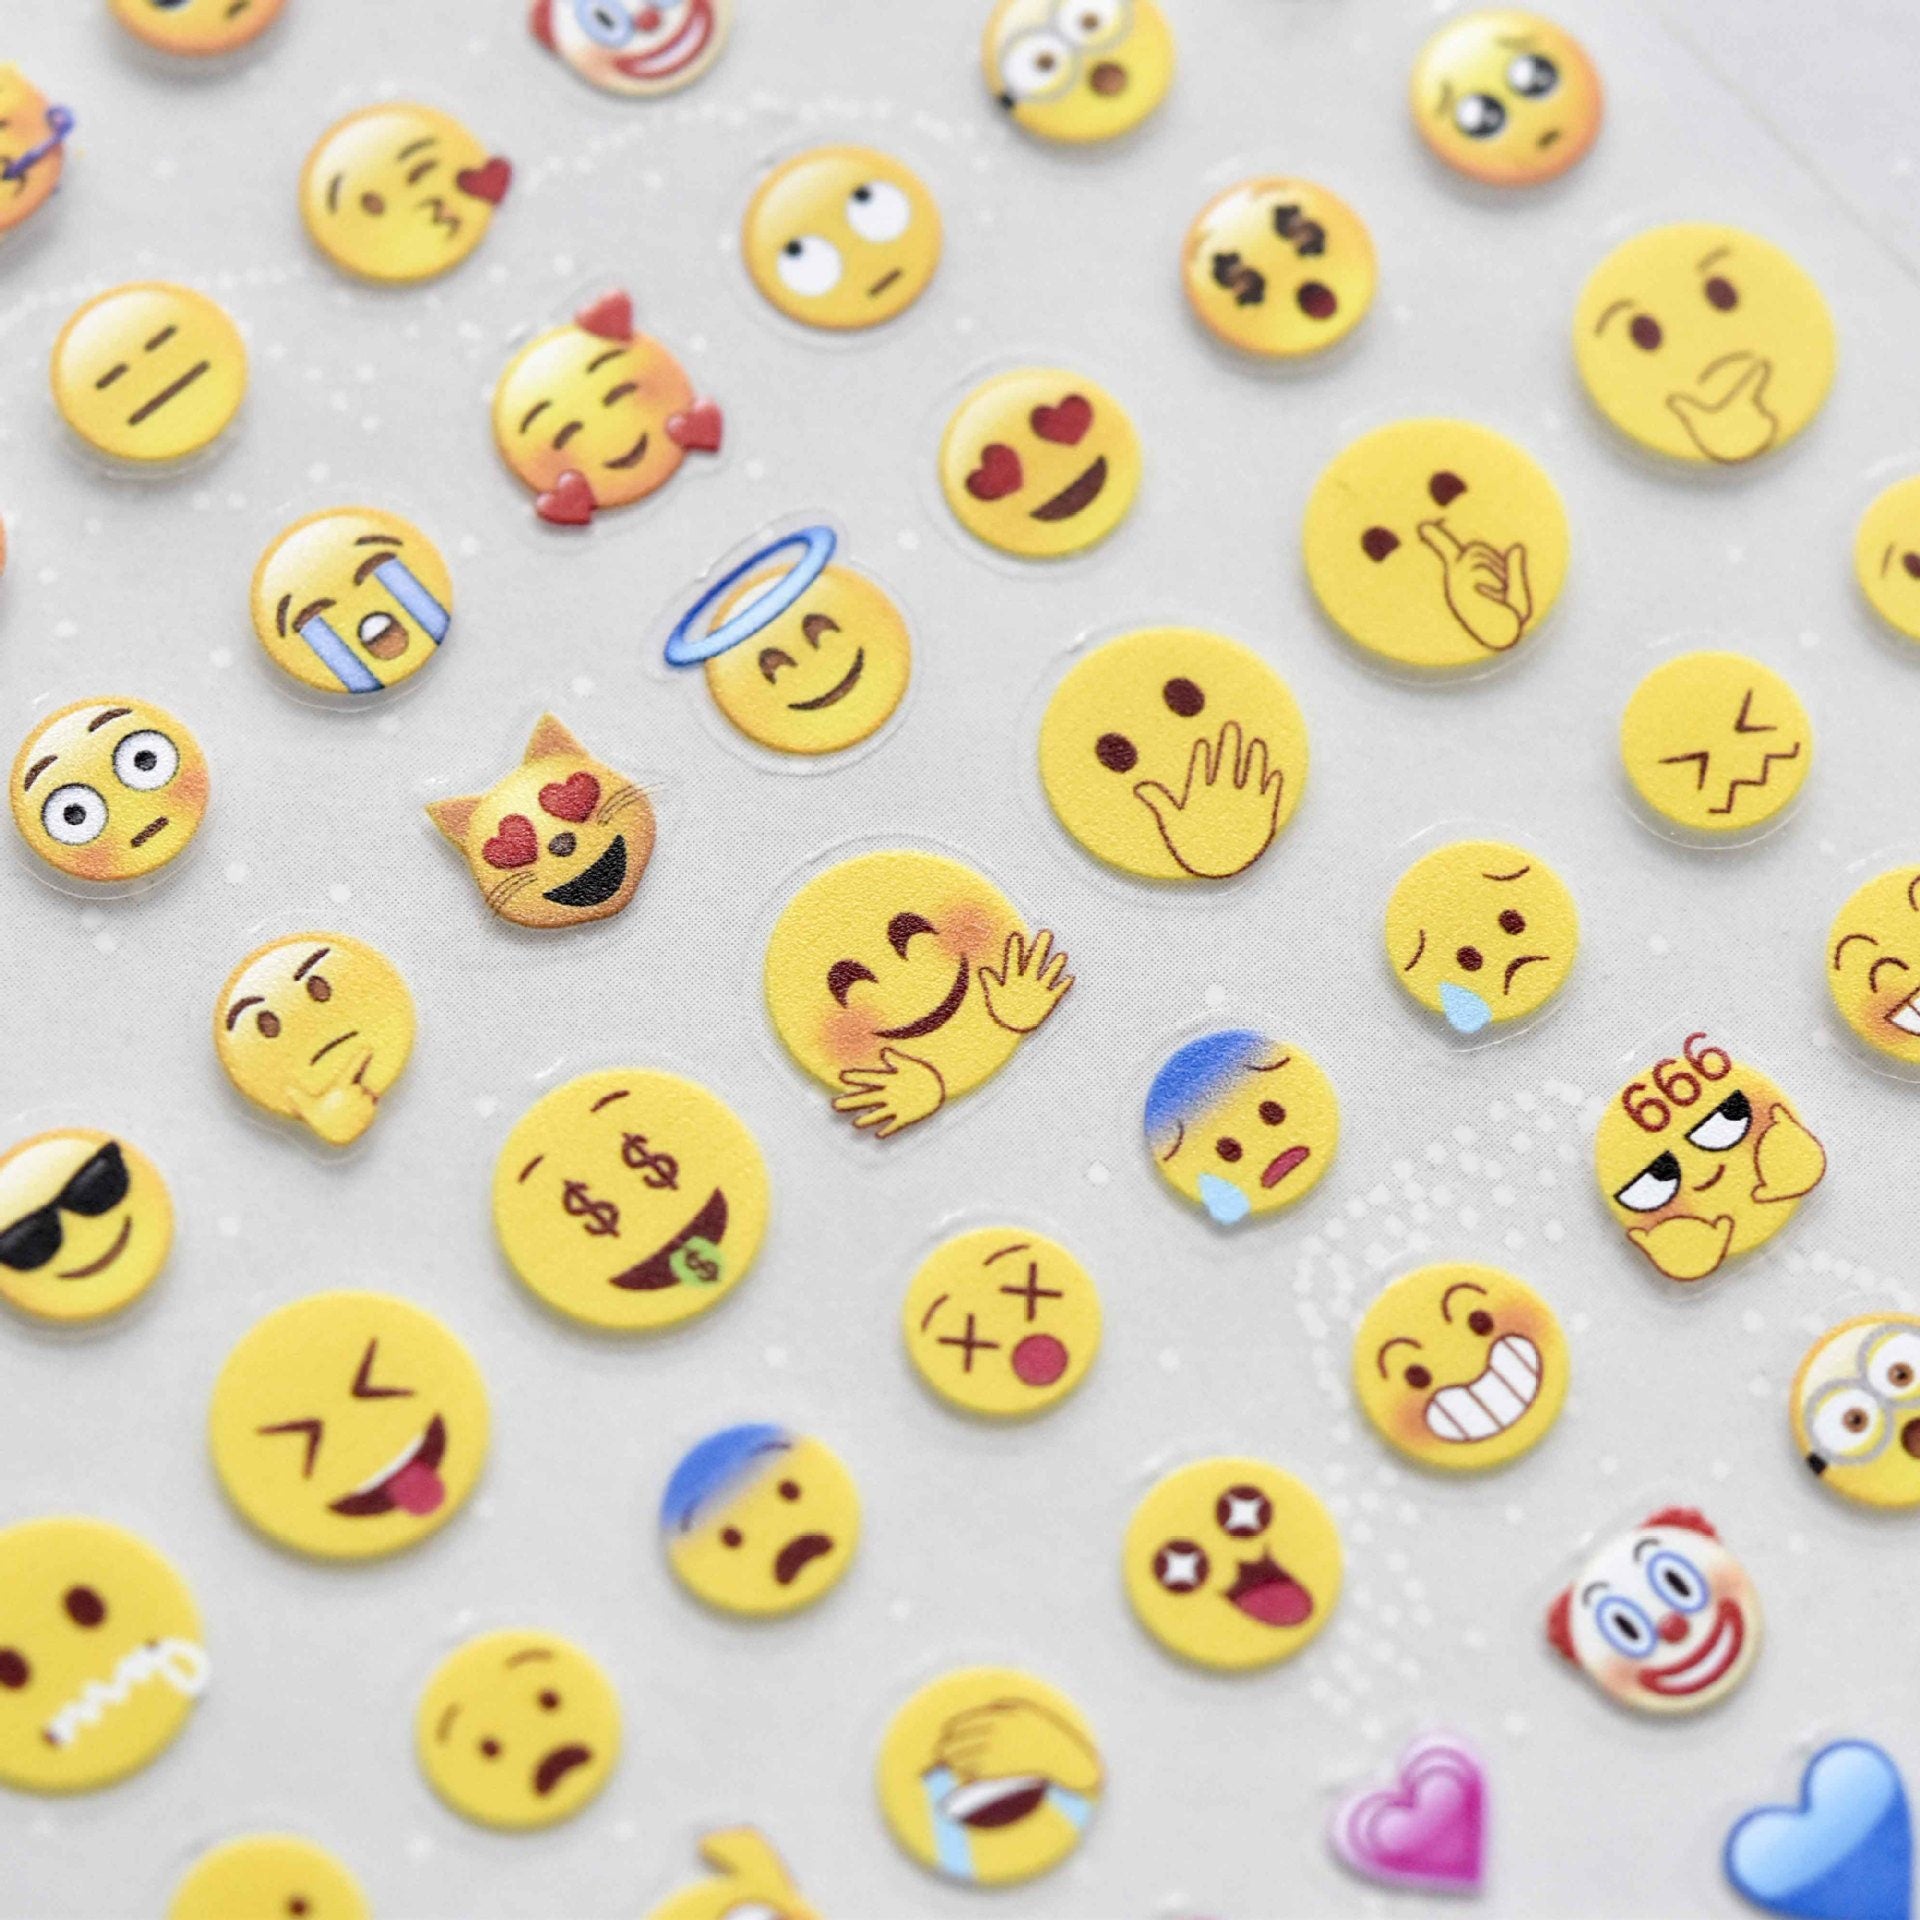 Emoji Nail Art Sticker/ Smiley Happy Face DIY Tips Stickers/Ultra thin Peel Off Emoji Face Nail Decals/ Social Media Text expression meme